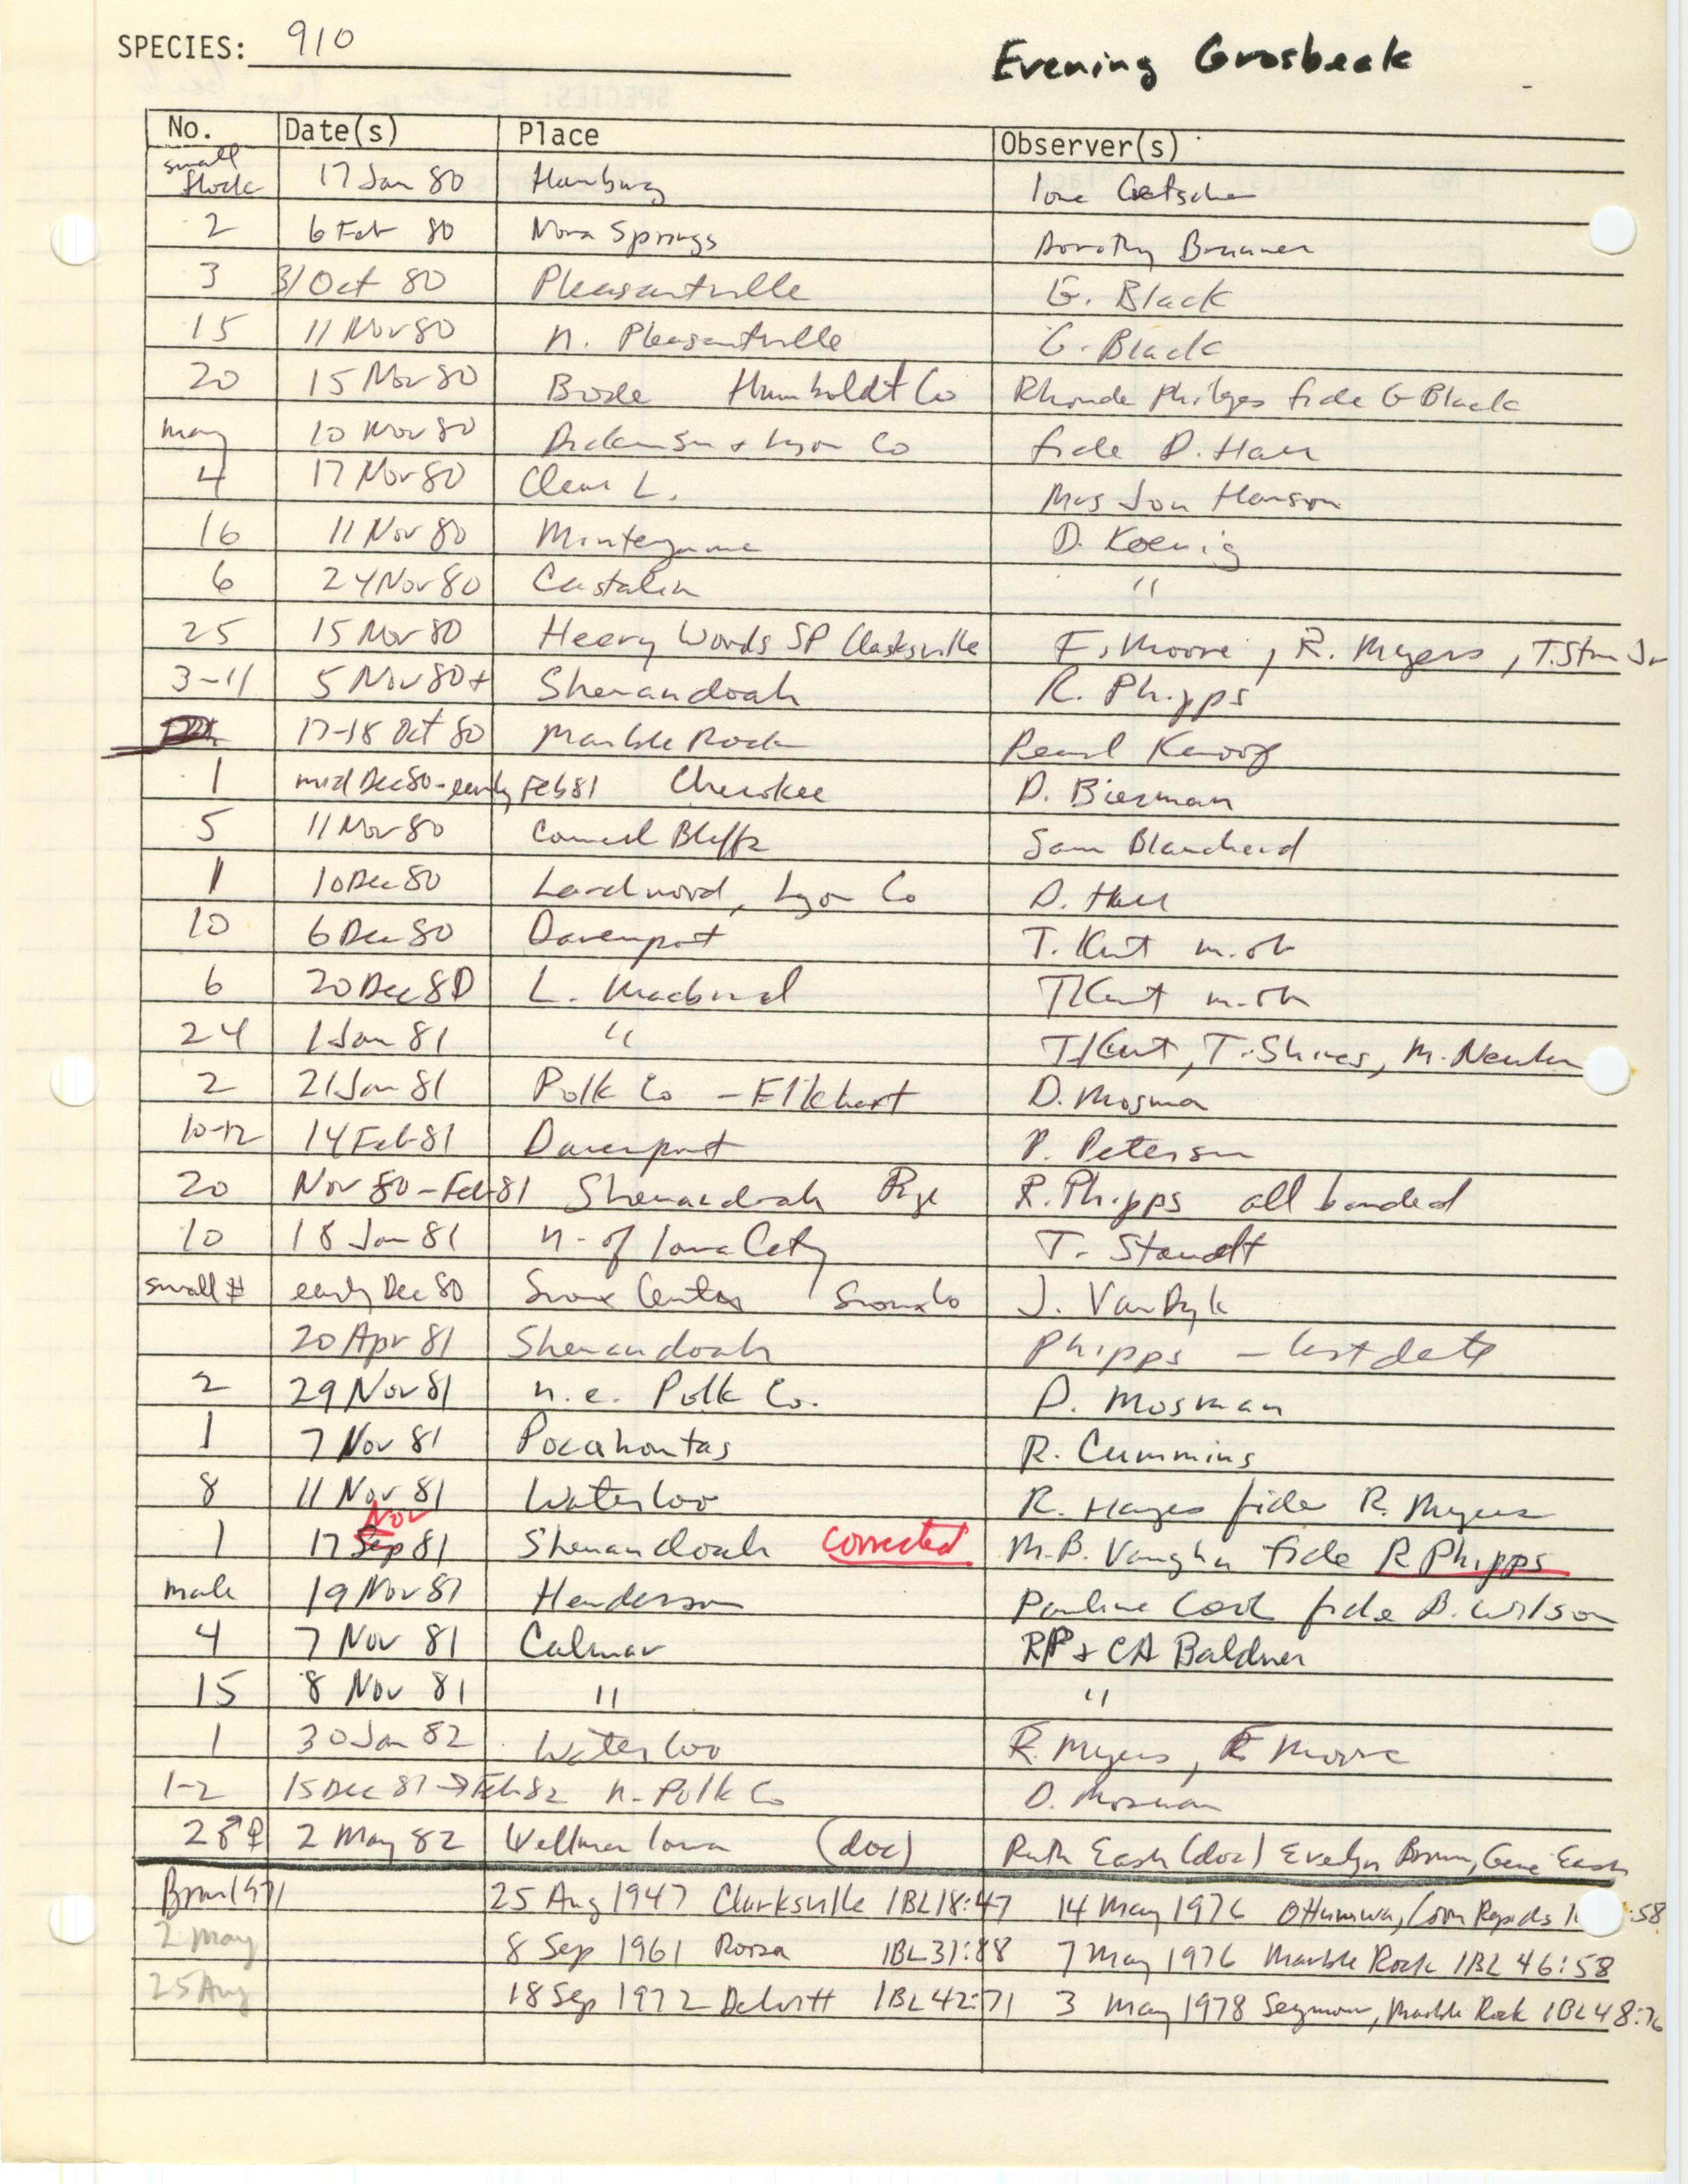 Iowa Ornithologists' Union, field report compiled data, Evening Grosbeak, 1947-1982